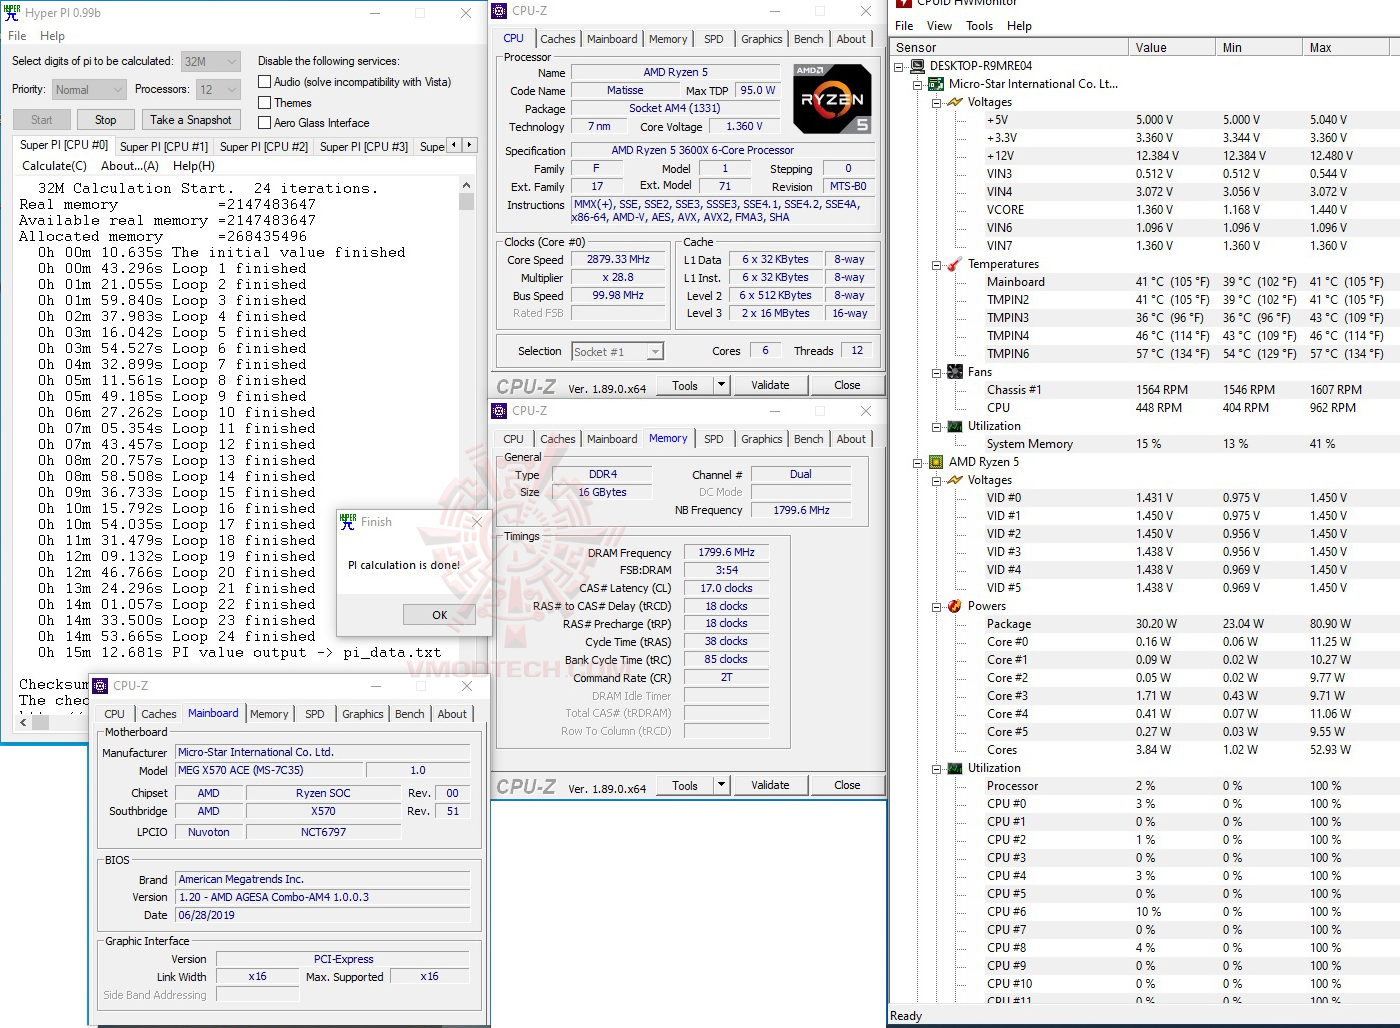 h32 AMD RYZEN 5 3600X PROCESSOR REVIEW 